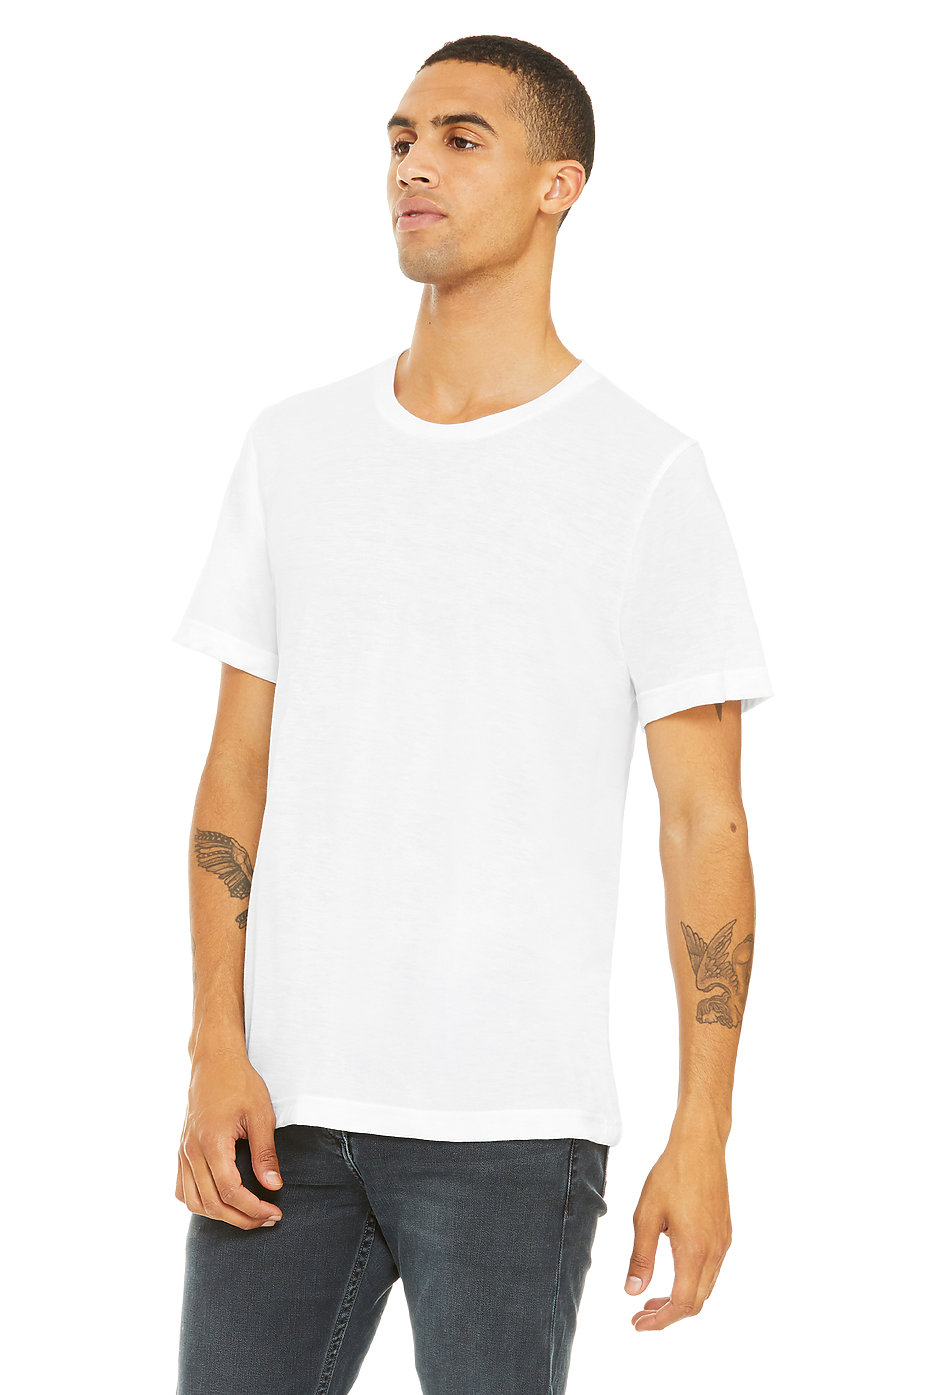 Unisex T Shirts | Wholesale T Shirts | Fast Fashion | Plain Blank T ...